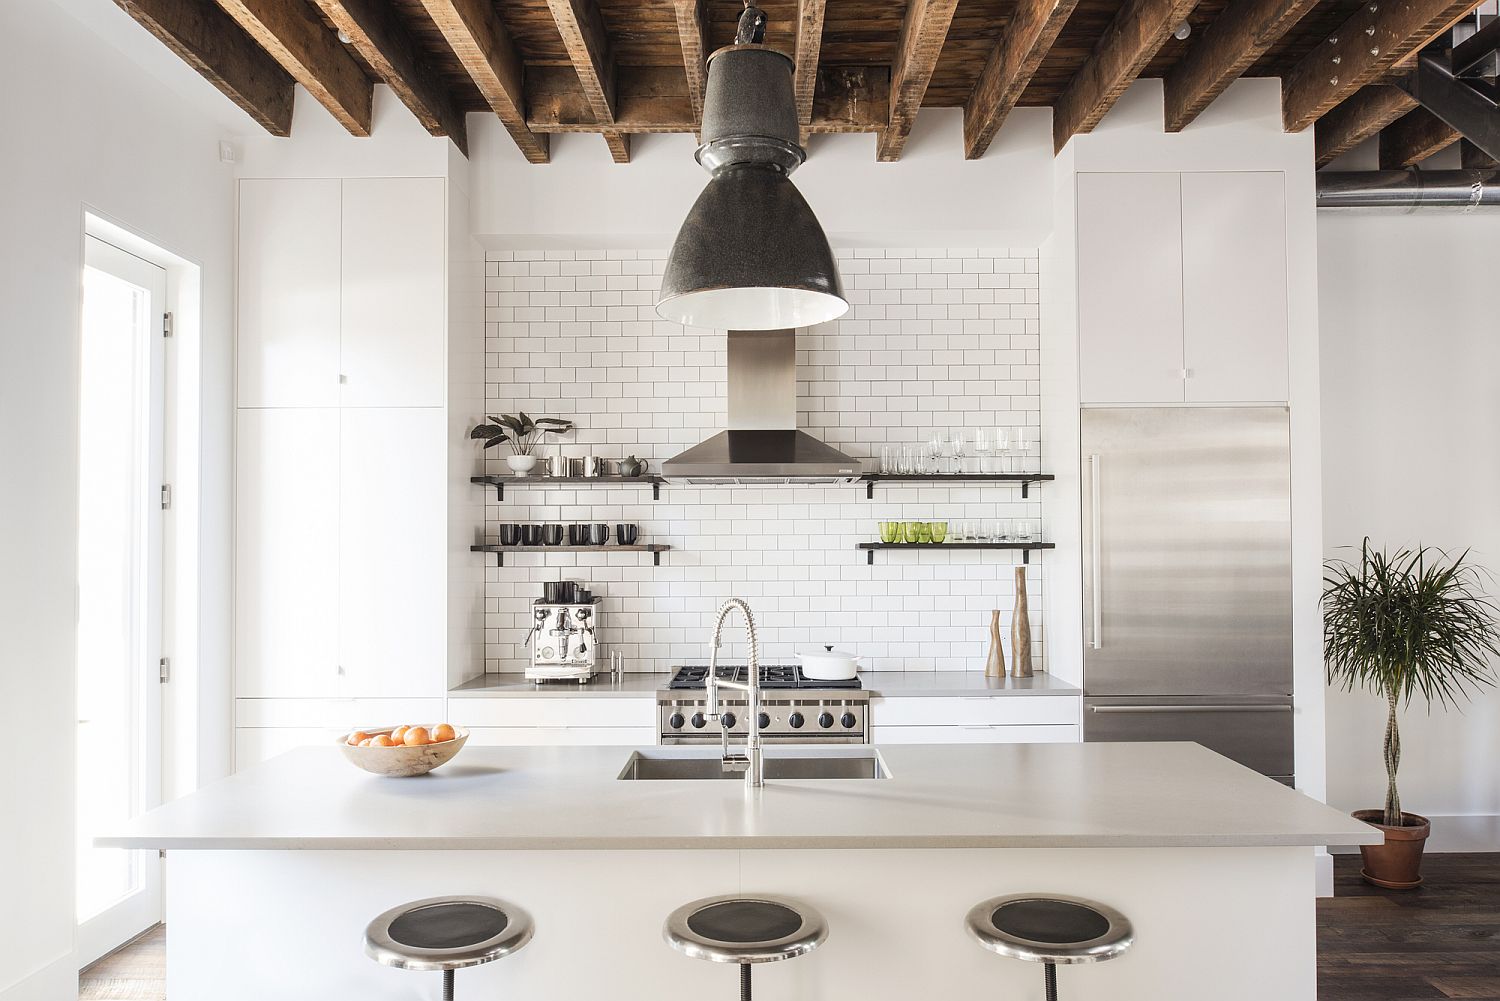 Oversized pendant light brings industrial elegance to the modern kitchen